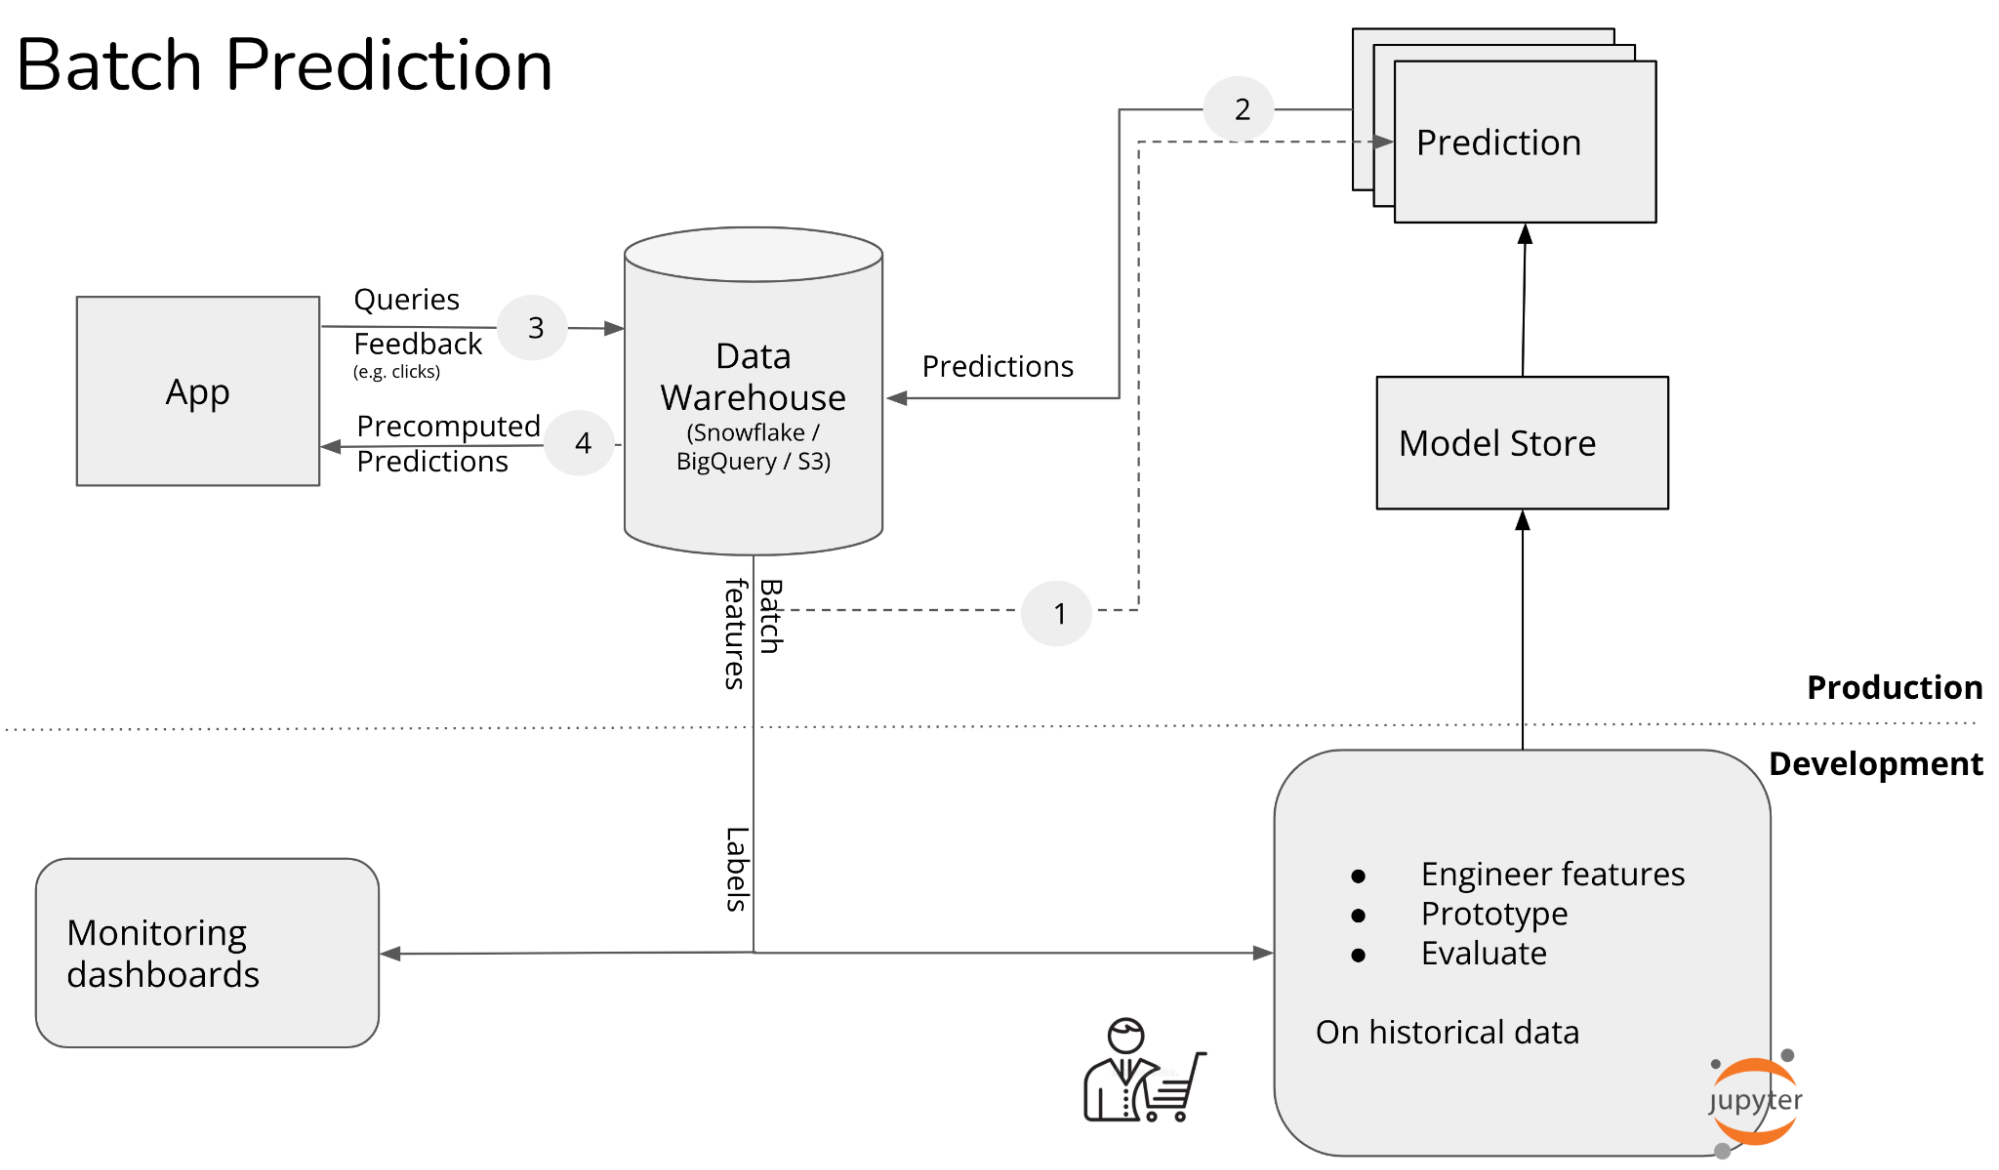 A typical batch prediction workflow